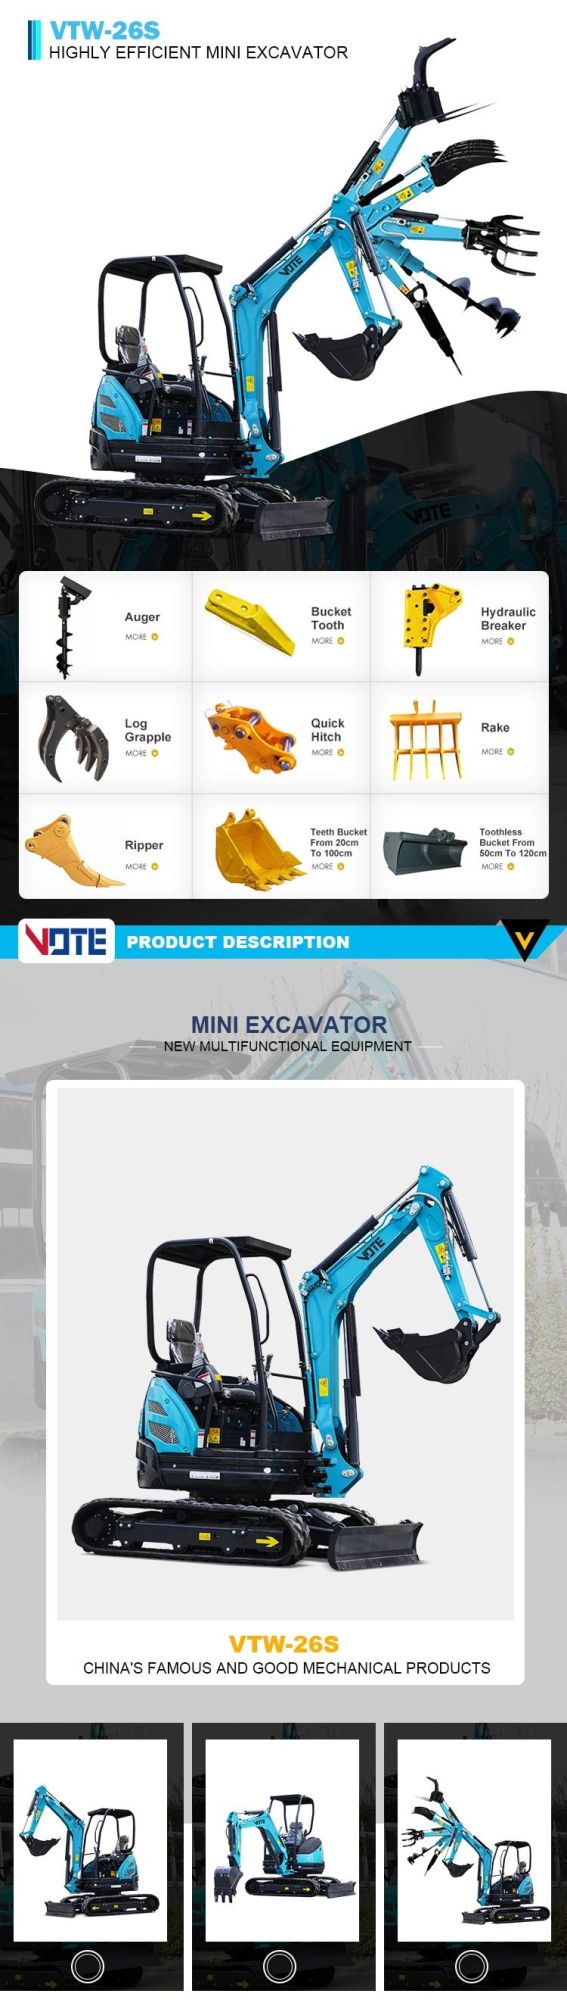 Hydraulic 1 Ton 2 Ton Mini Excavator Backhoe Excavator Mini Excavator with Bucket Capacity 600mm3